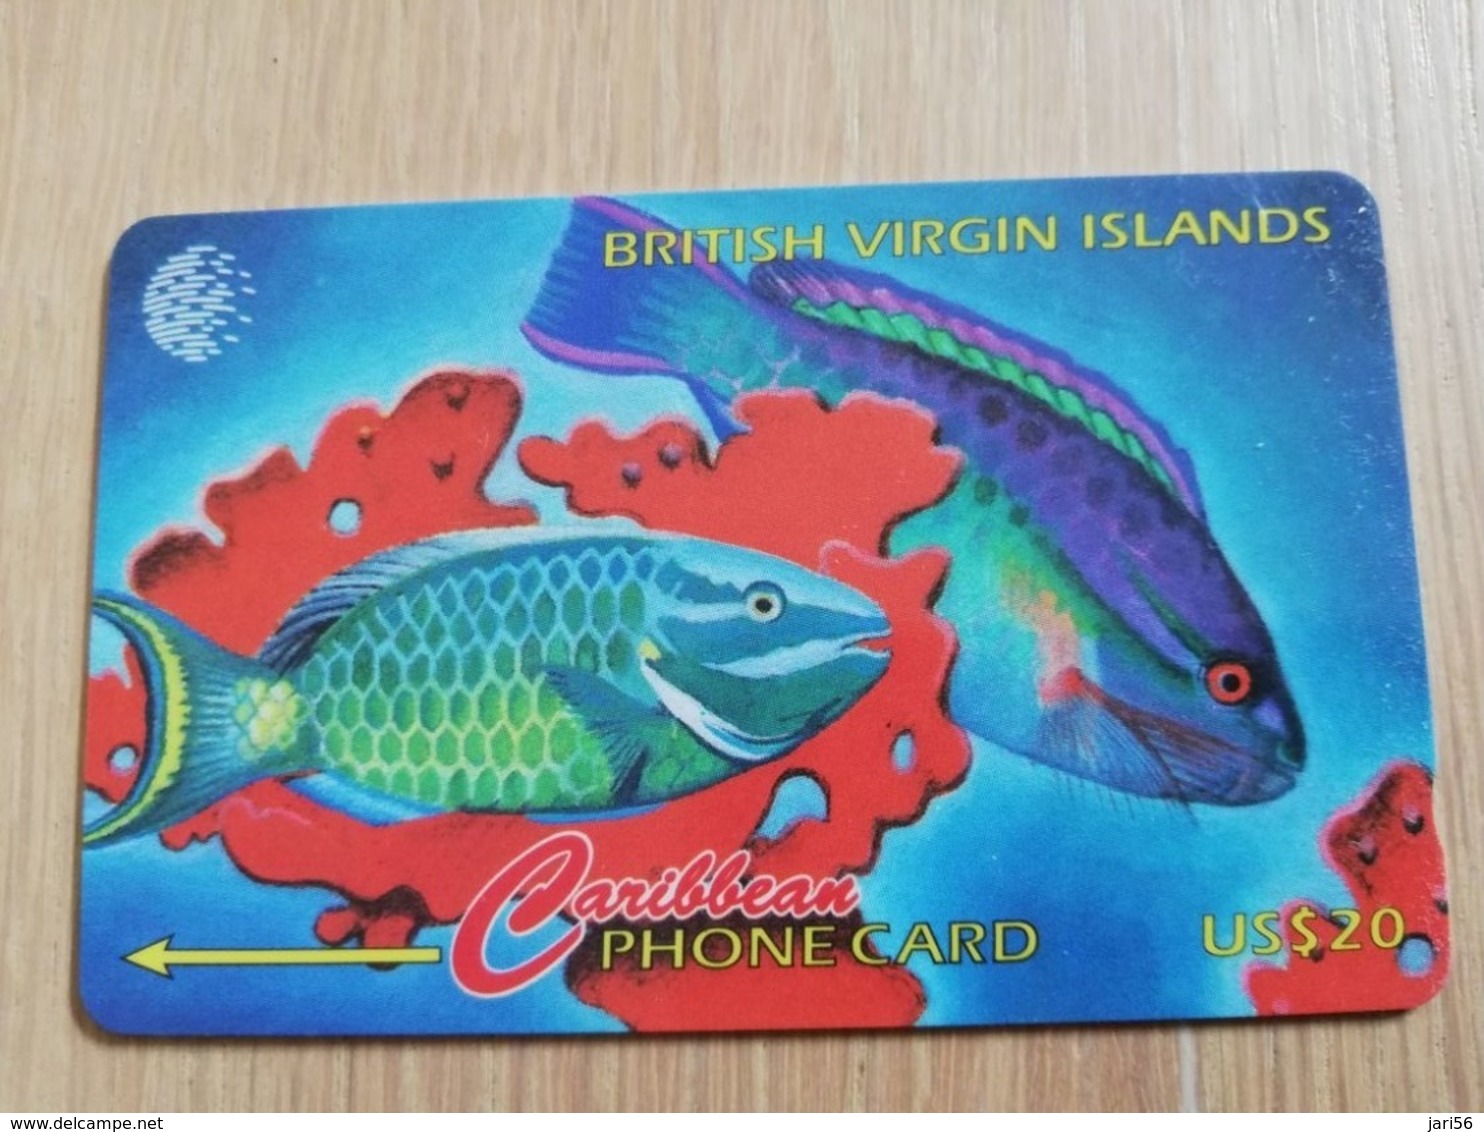 BRITSCH VIRGIN ISLANDS  US$ 20  BVI-25B   PARROTH FISH    25CBVB     fine used card   ** 2680**